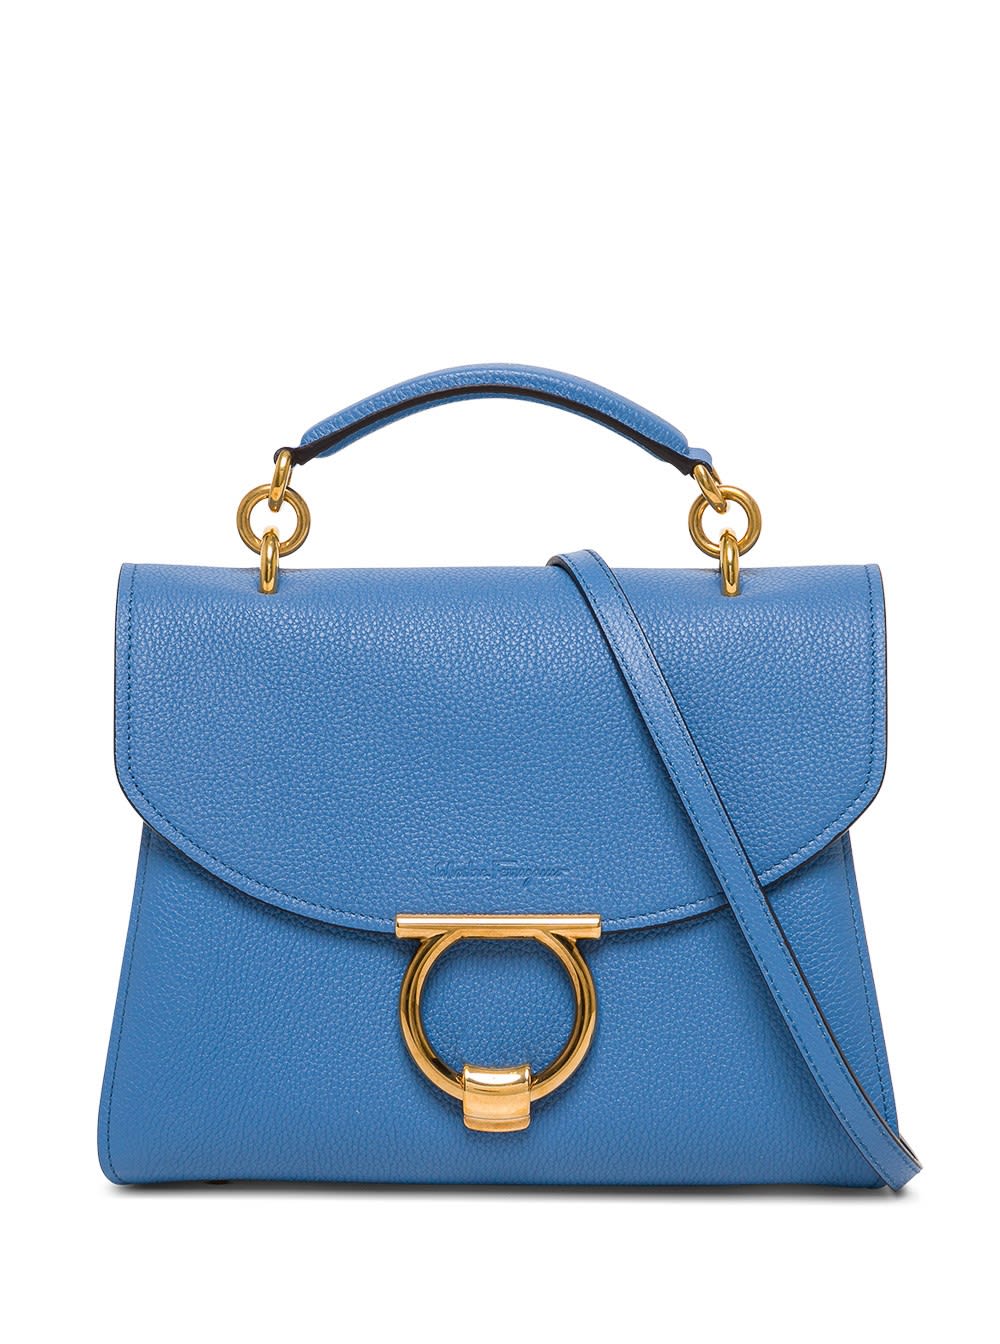 Salvatore Ferragamo Margot Crossbody Bag In Light Blue Leather